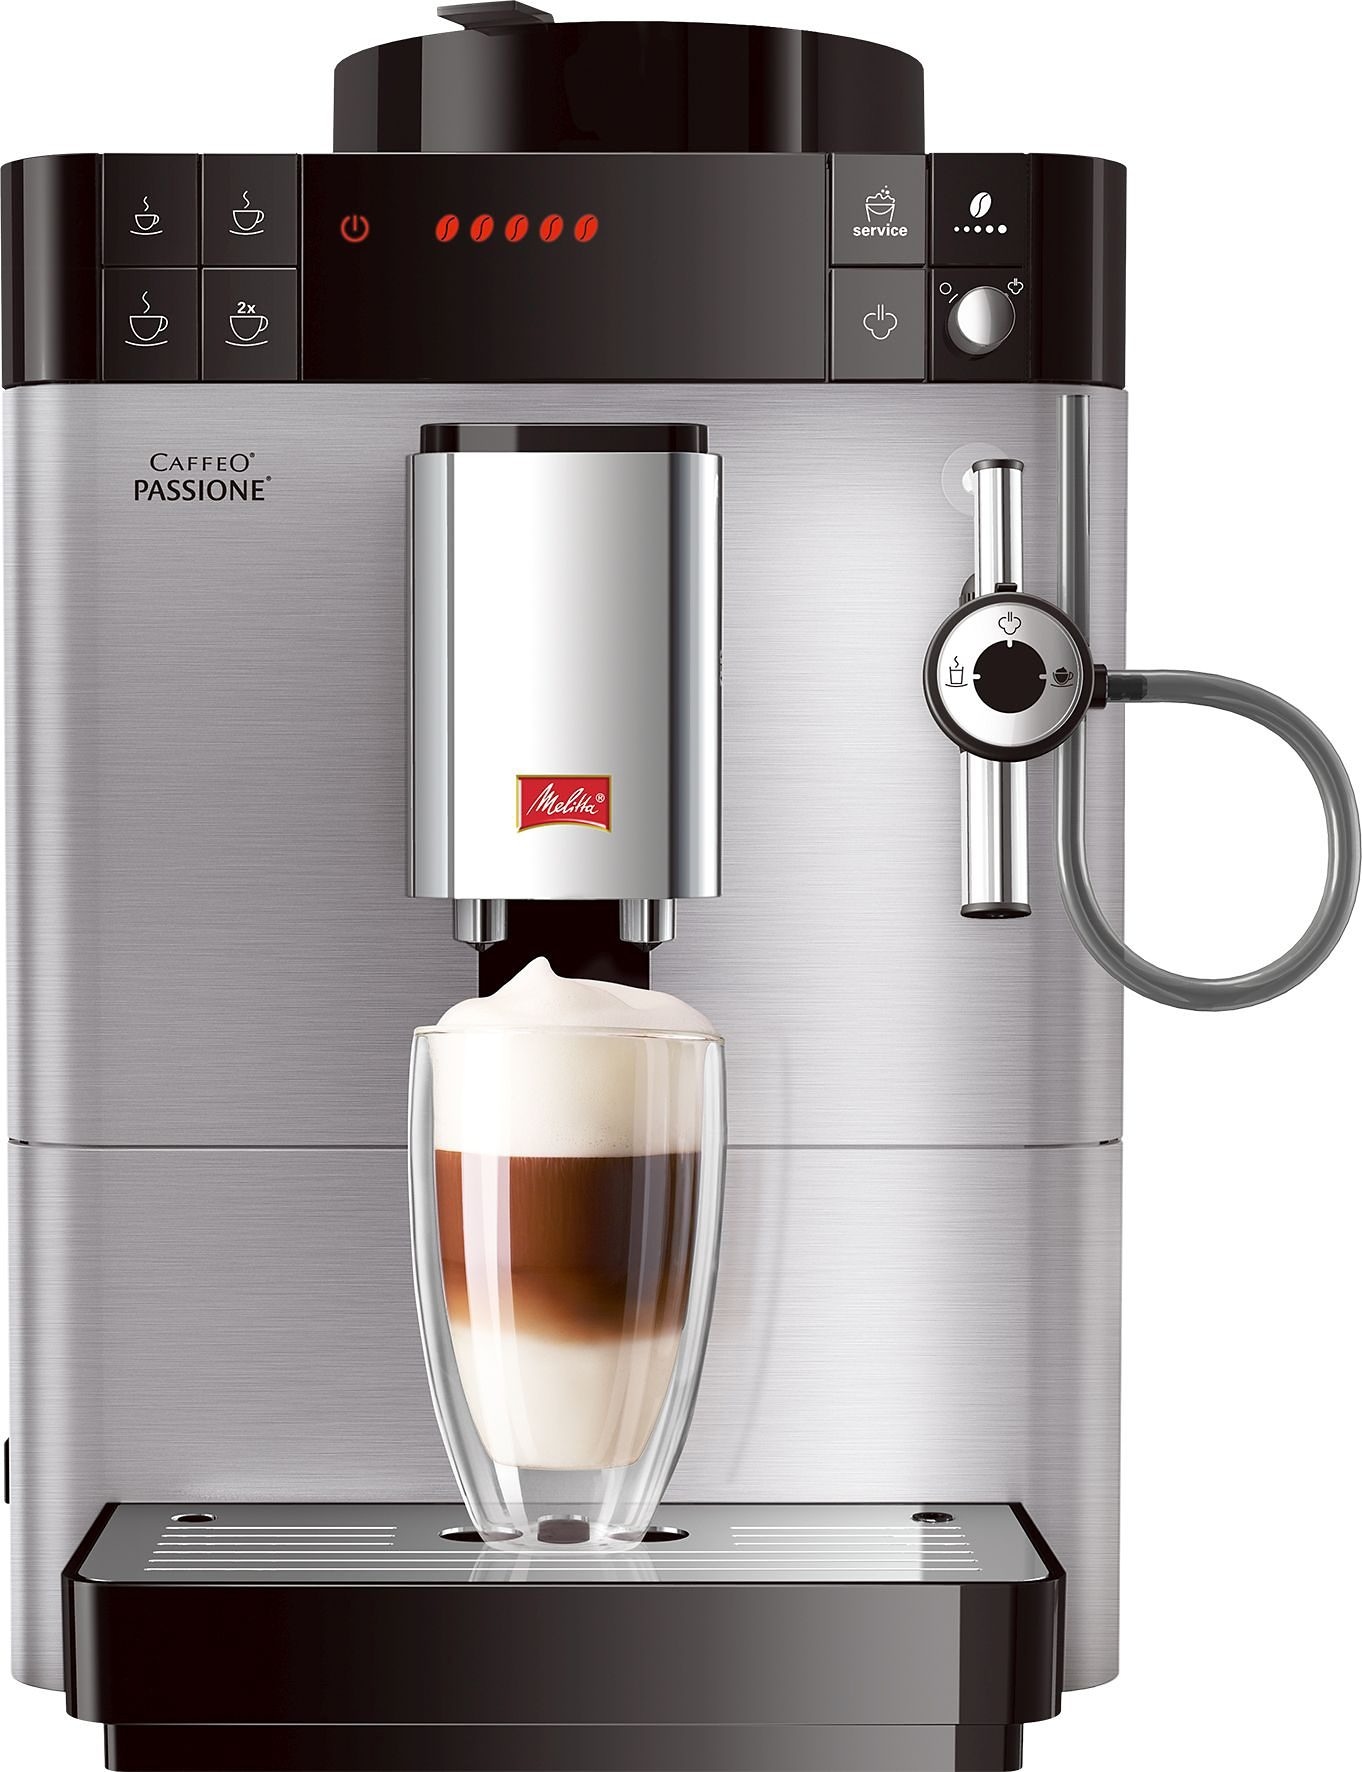 Edelstahl-Front, frisch Edelstahl«, Bohnen gemahlene »Passione® BAUR Kaffeevollautomat F54/0-100, Moderne | tassengenau Melitta